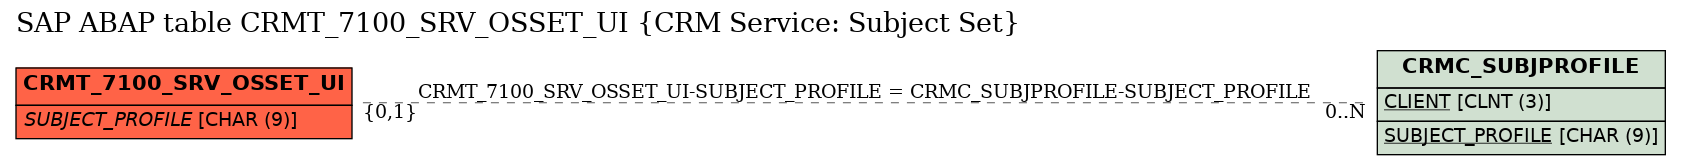 E-R Diagram for table CRMT_7100_SRV_OSSET_UI (CRM Service: Subject Set)